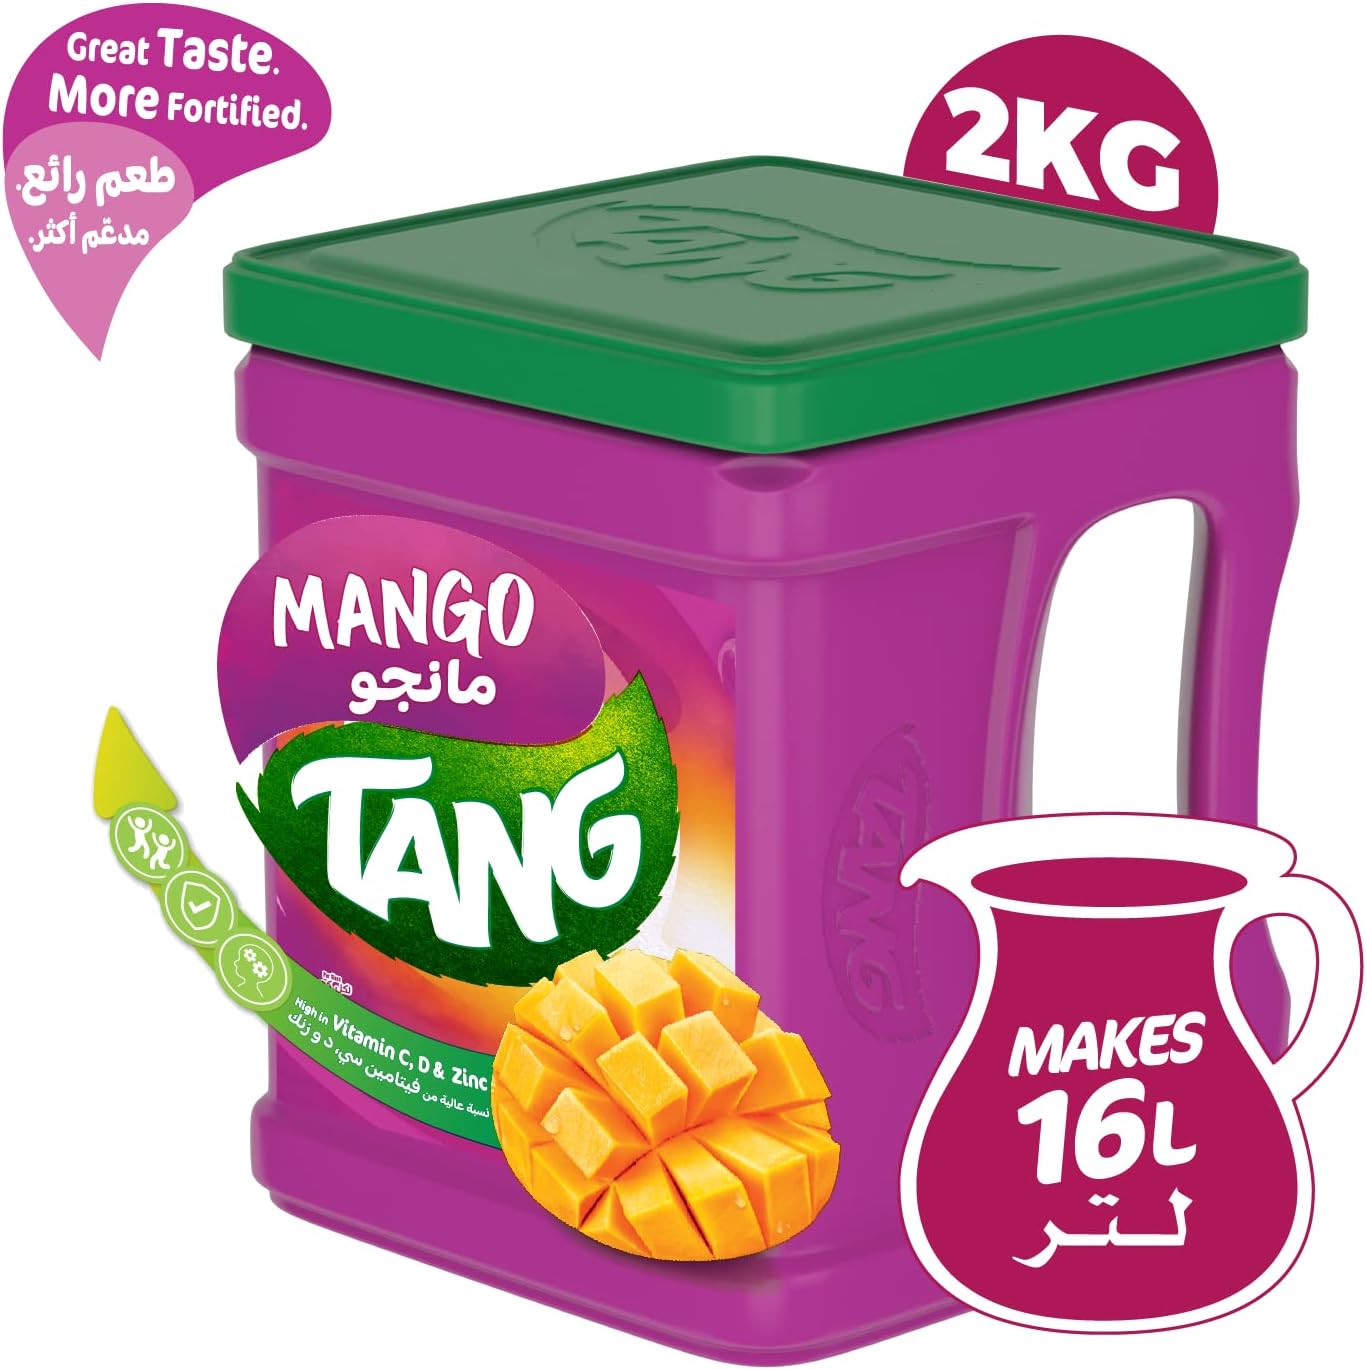 Tang orange flavoured juice, 2 kg